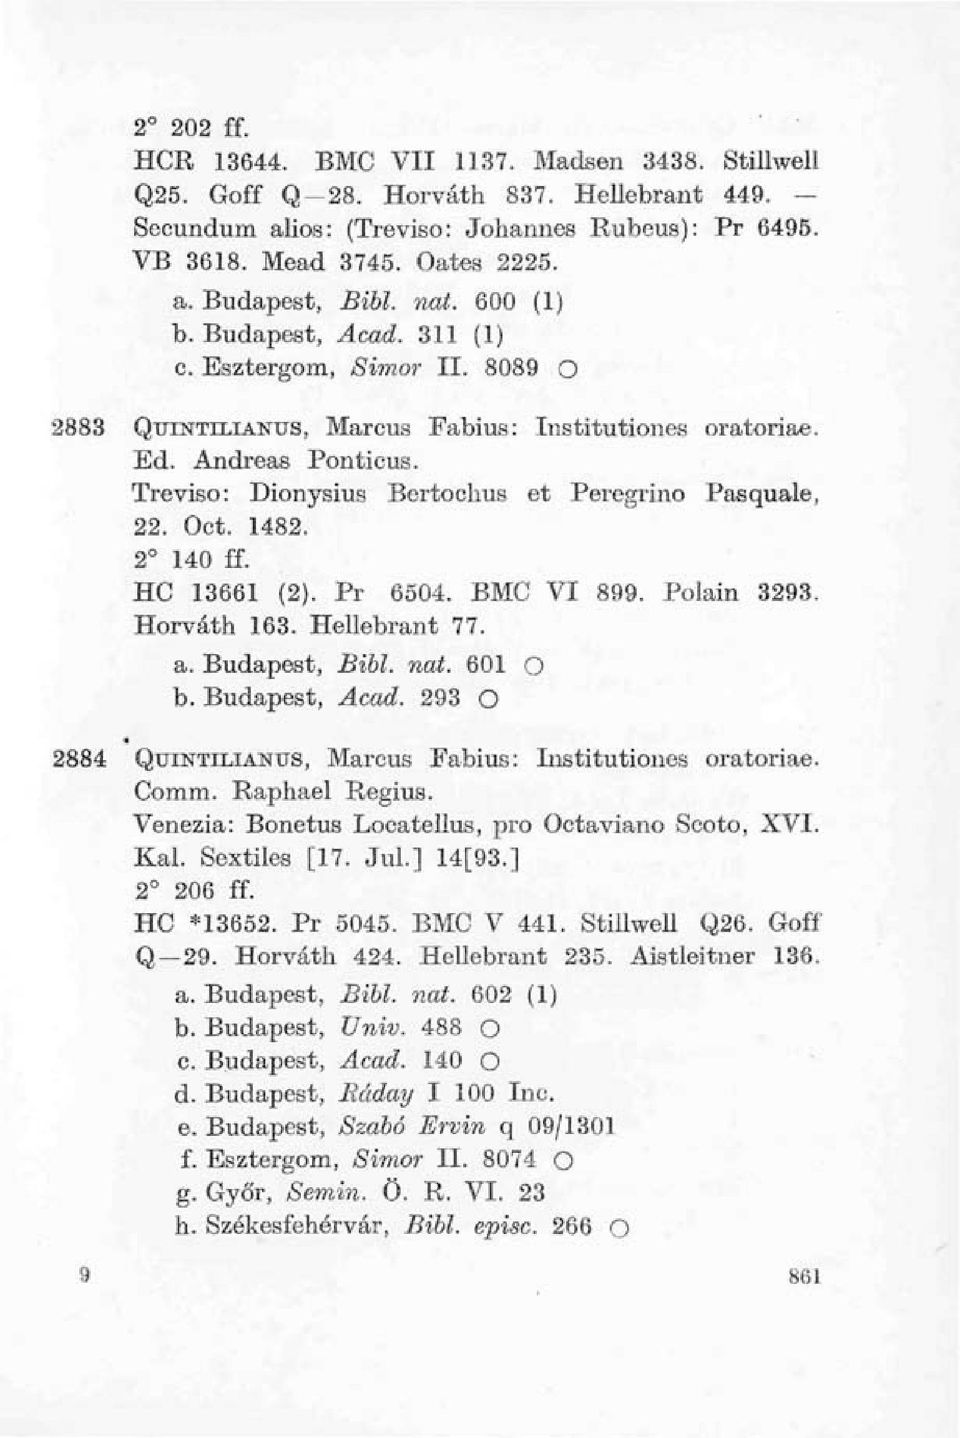 Treviso: Dionysius Bertochus et Peregrino Pasquale, 22. Oct. 1482. 2 140 ff. HC 13661 (2). Pr 6504. BMC VI 899. Polain 3293. Horváth 163. Hellebrant 77. a. Budapest, Bibi. nat. 601 O b.